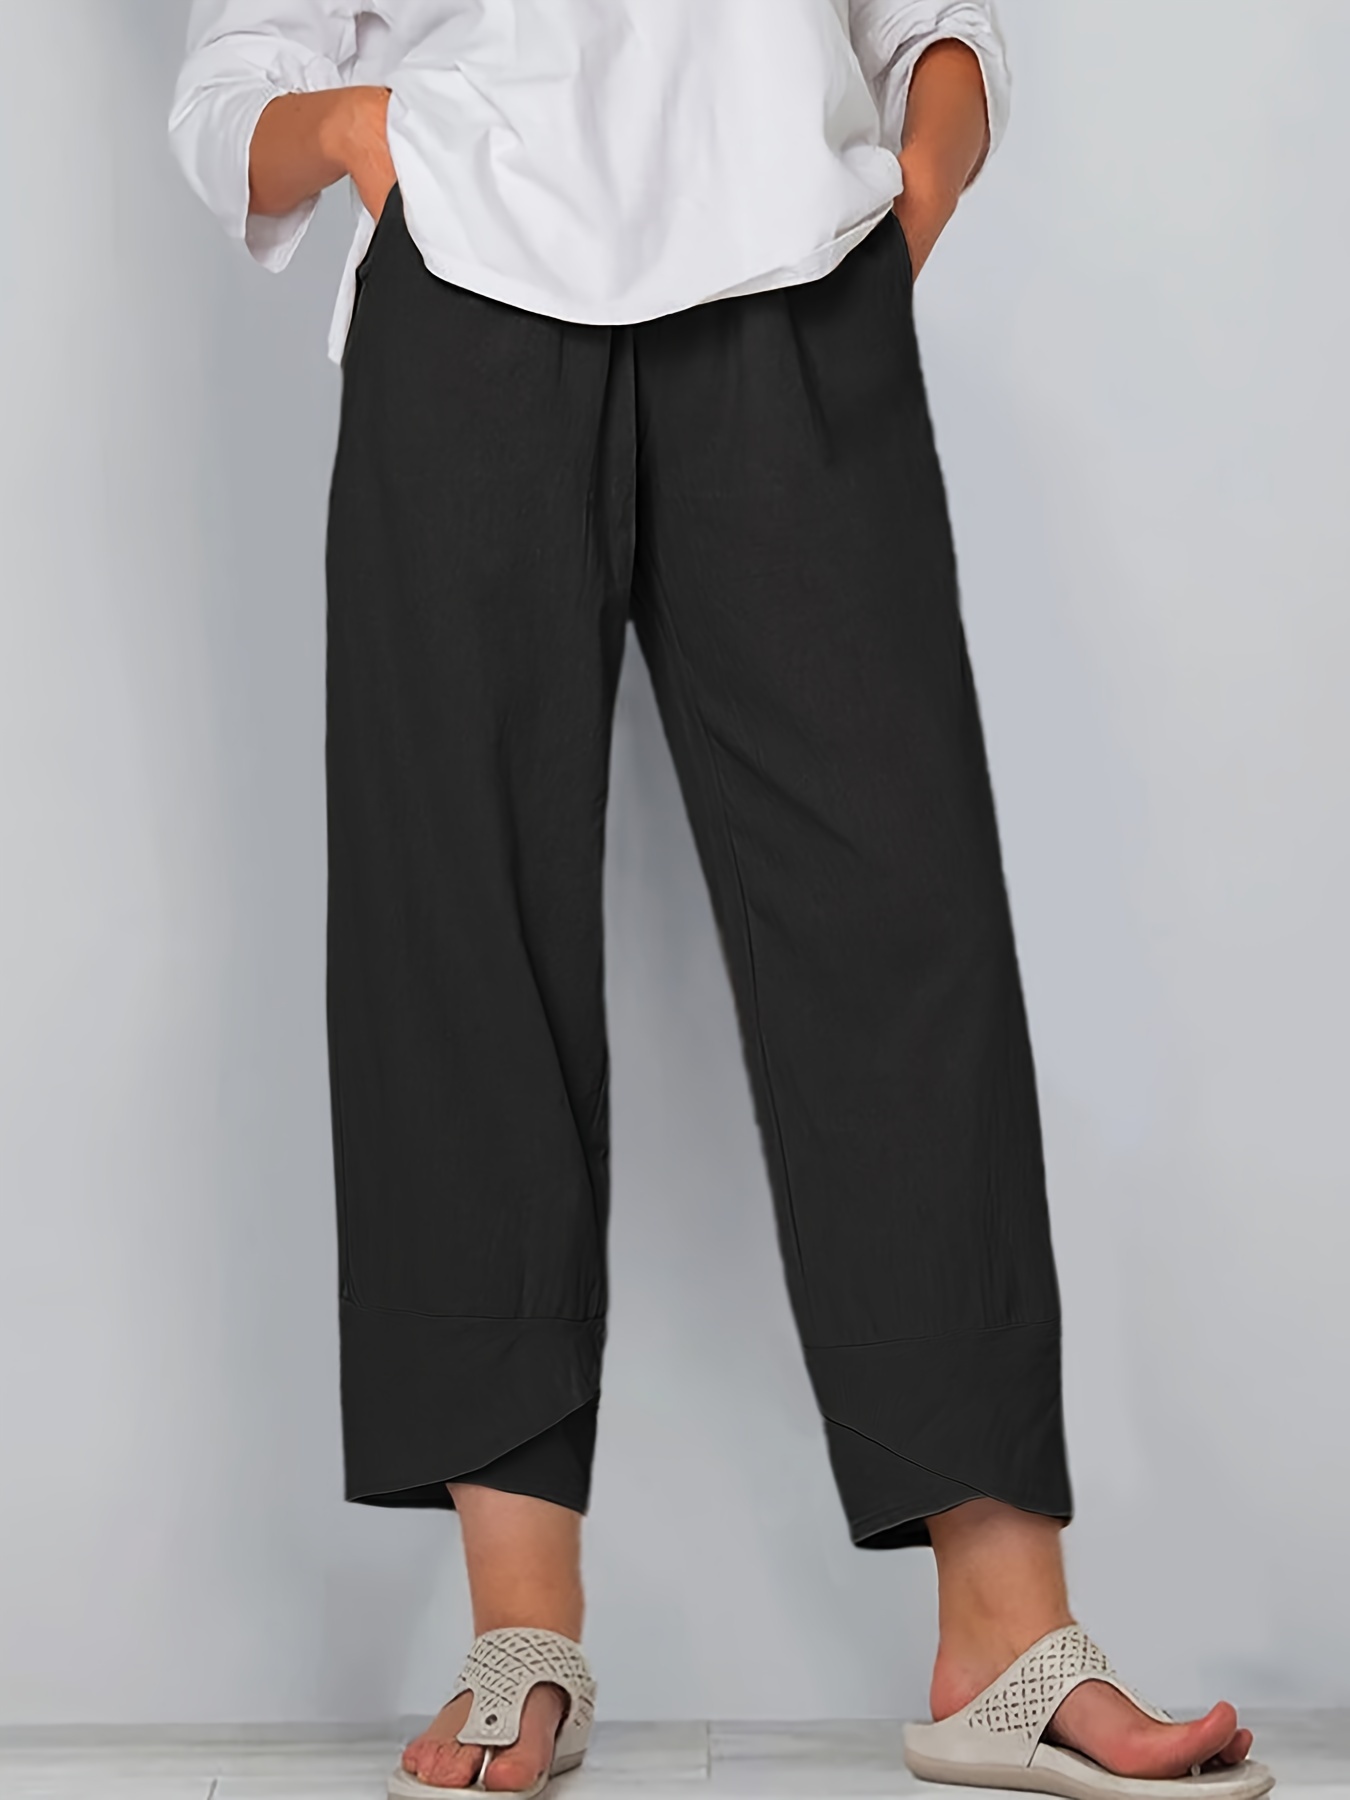 Cotton Linen Pants for Women Low Rise Drawstring Casual Loose Fit Wide Leg  Long Pants Solid Color Summer Comfy Trousers 